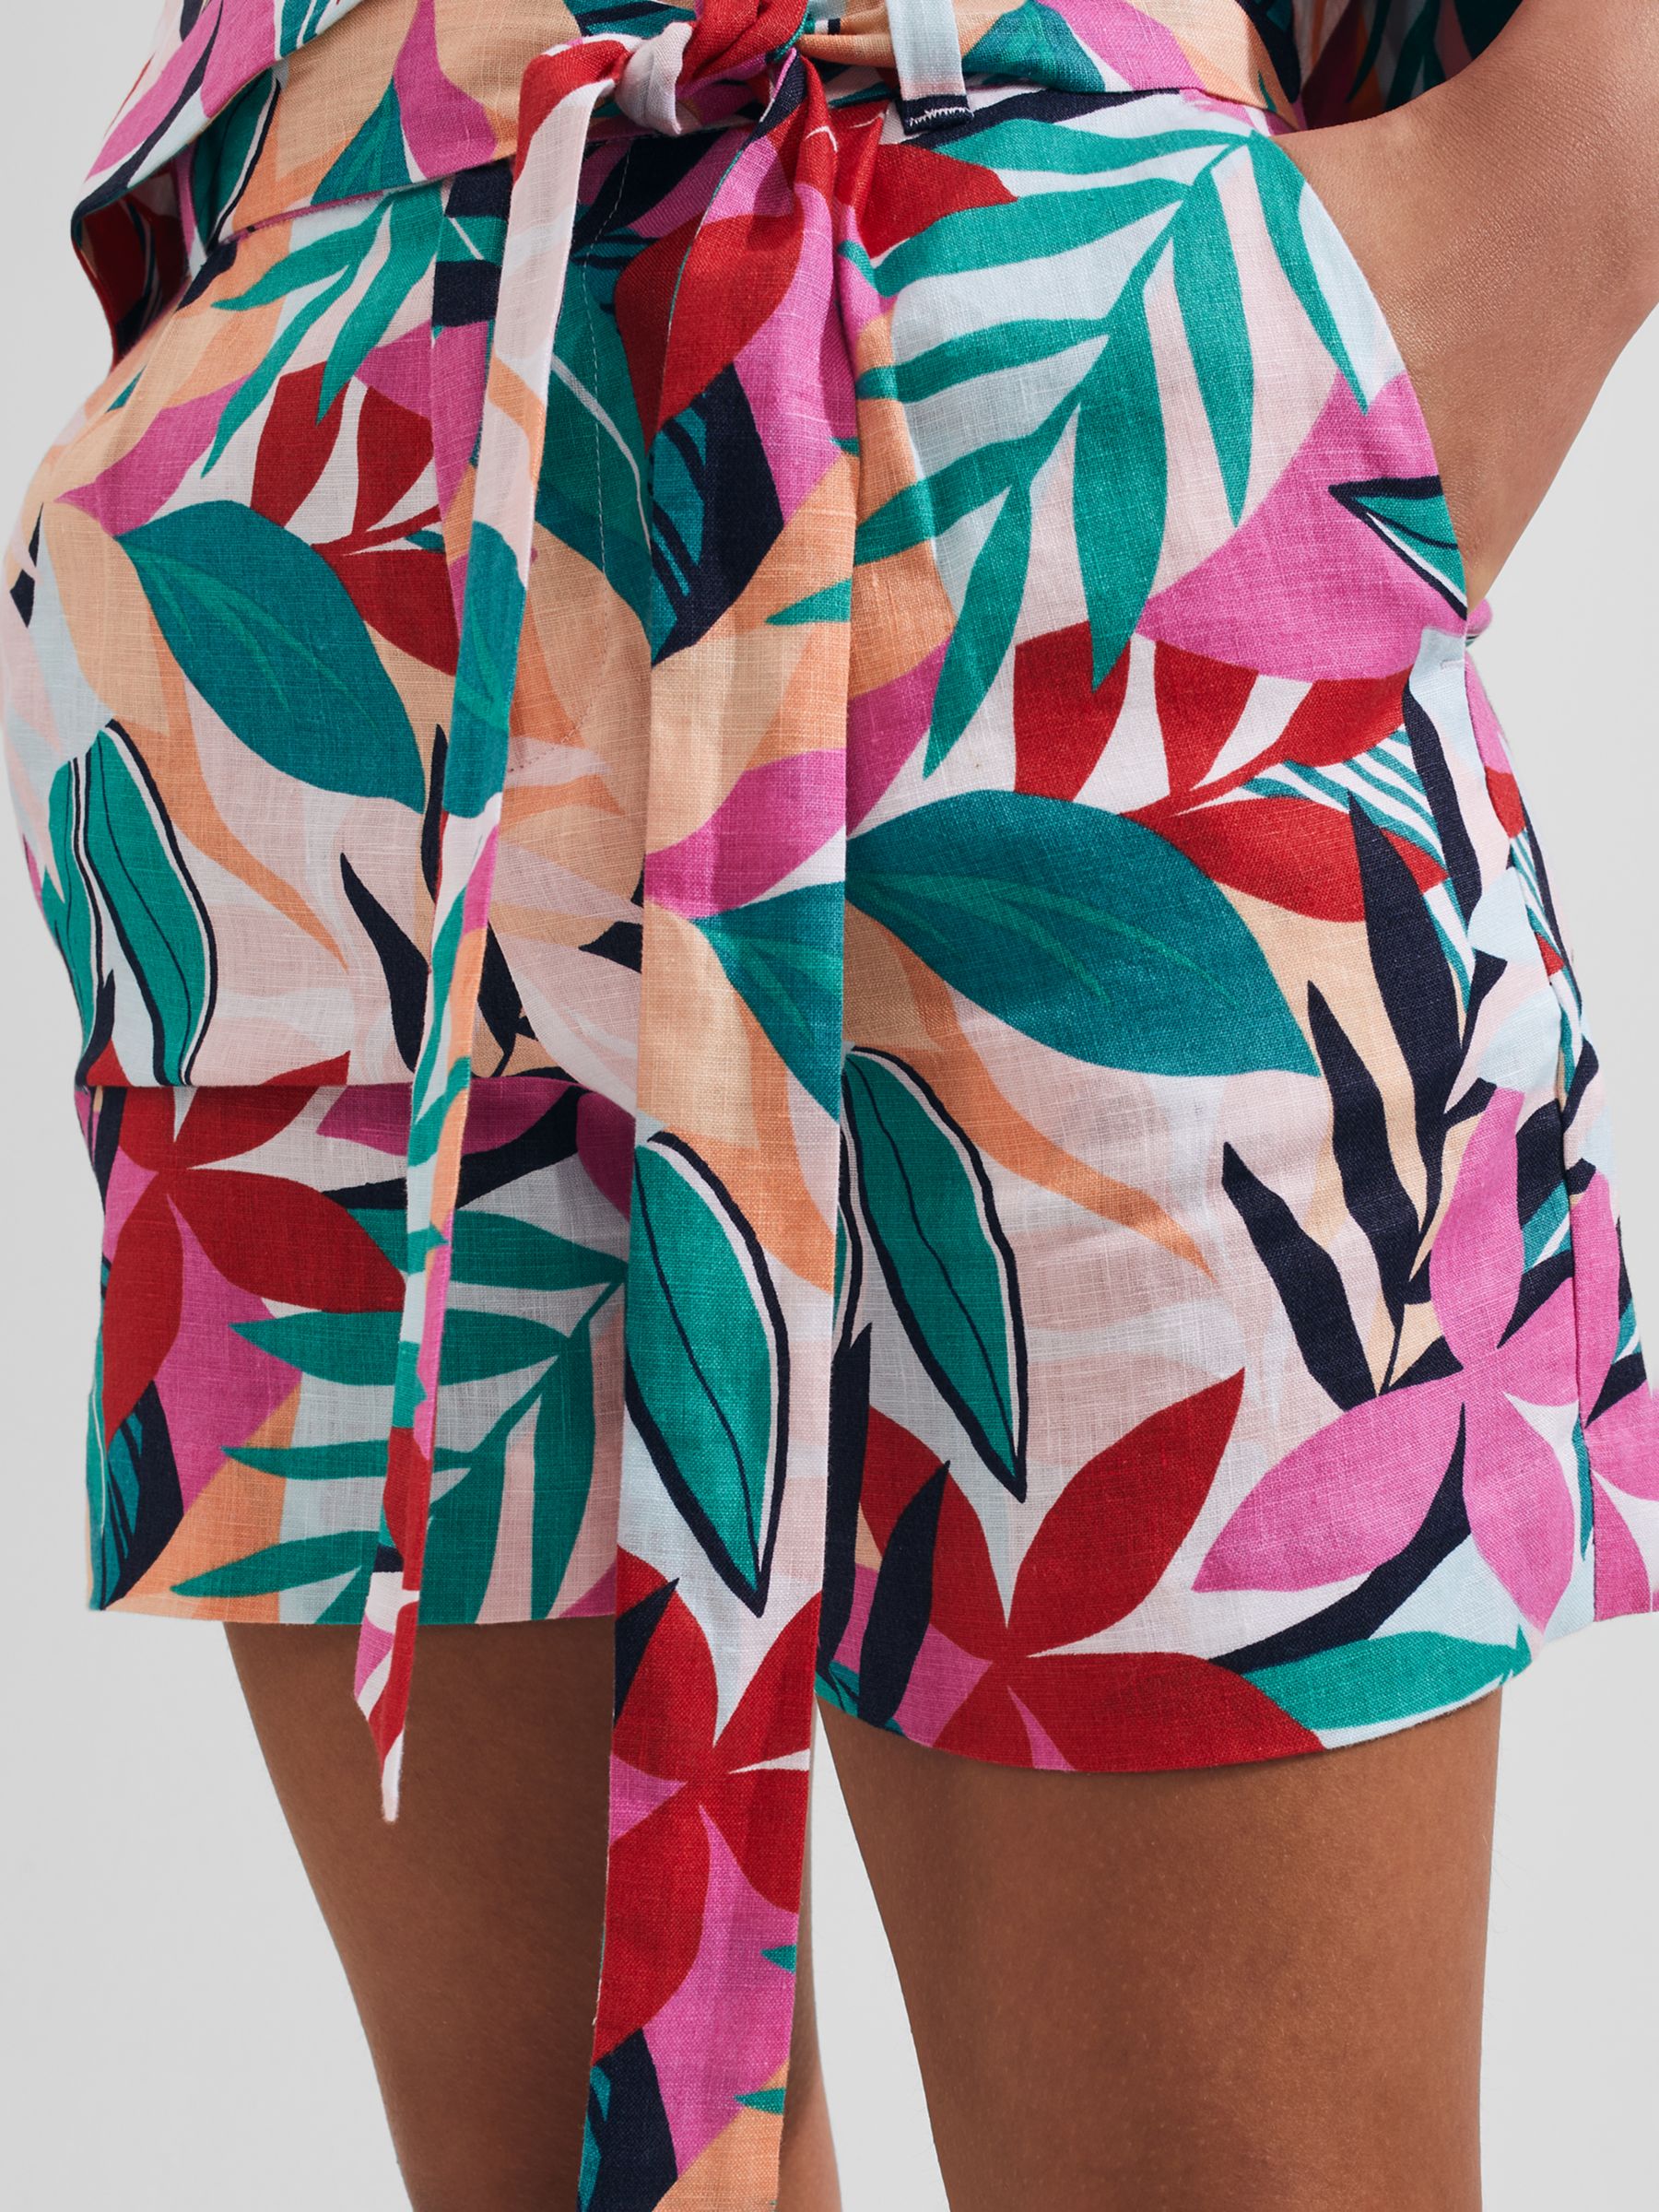 Hobbs Christie Floral Print Linen Shorts, Multi, 10